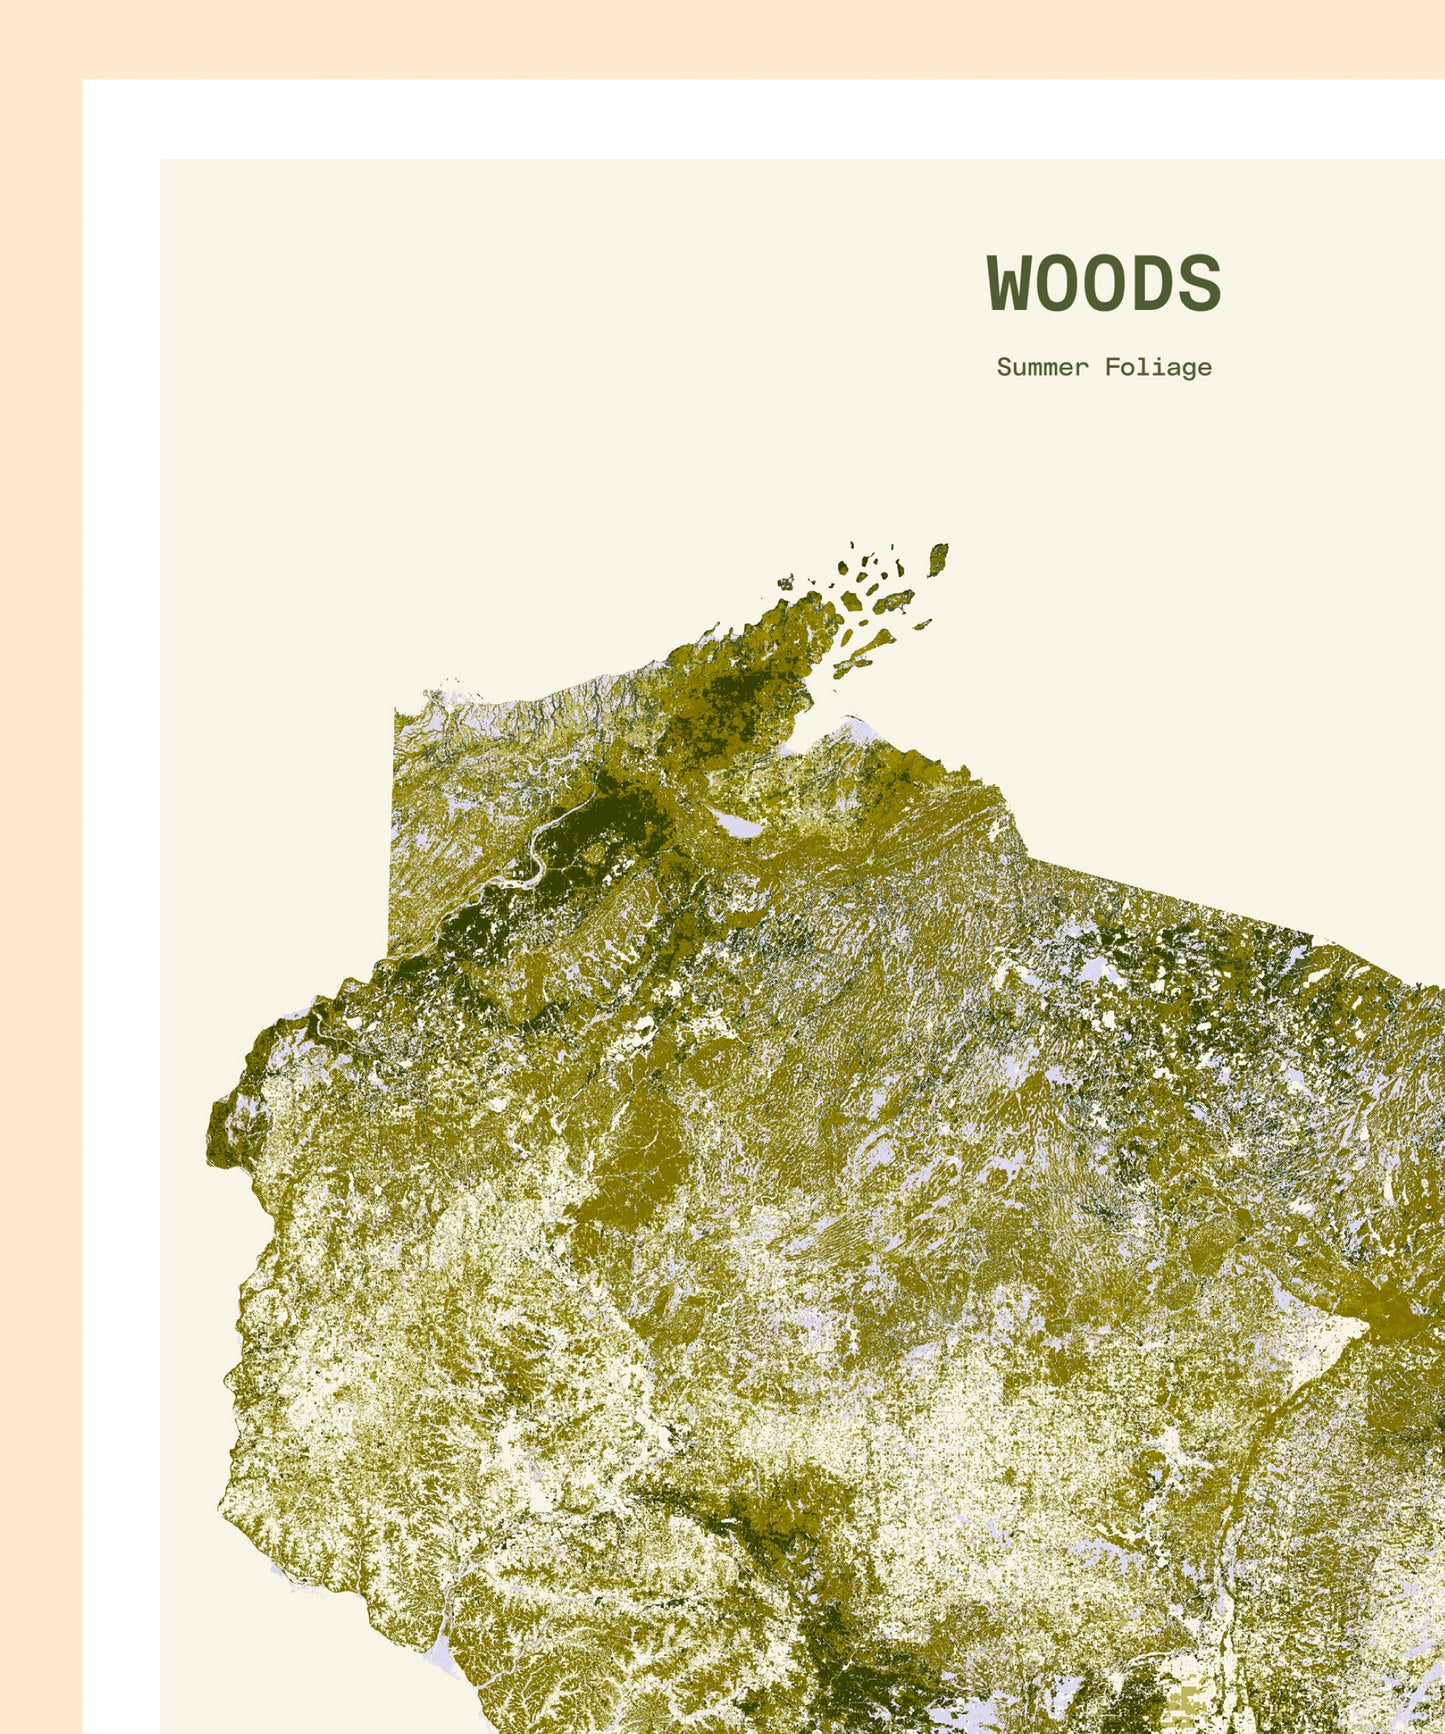 Woods: Summer Foliage